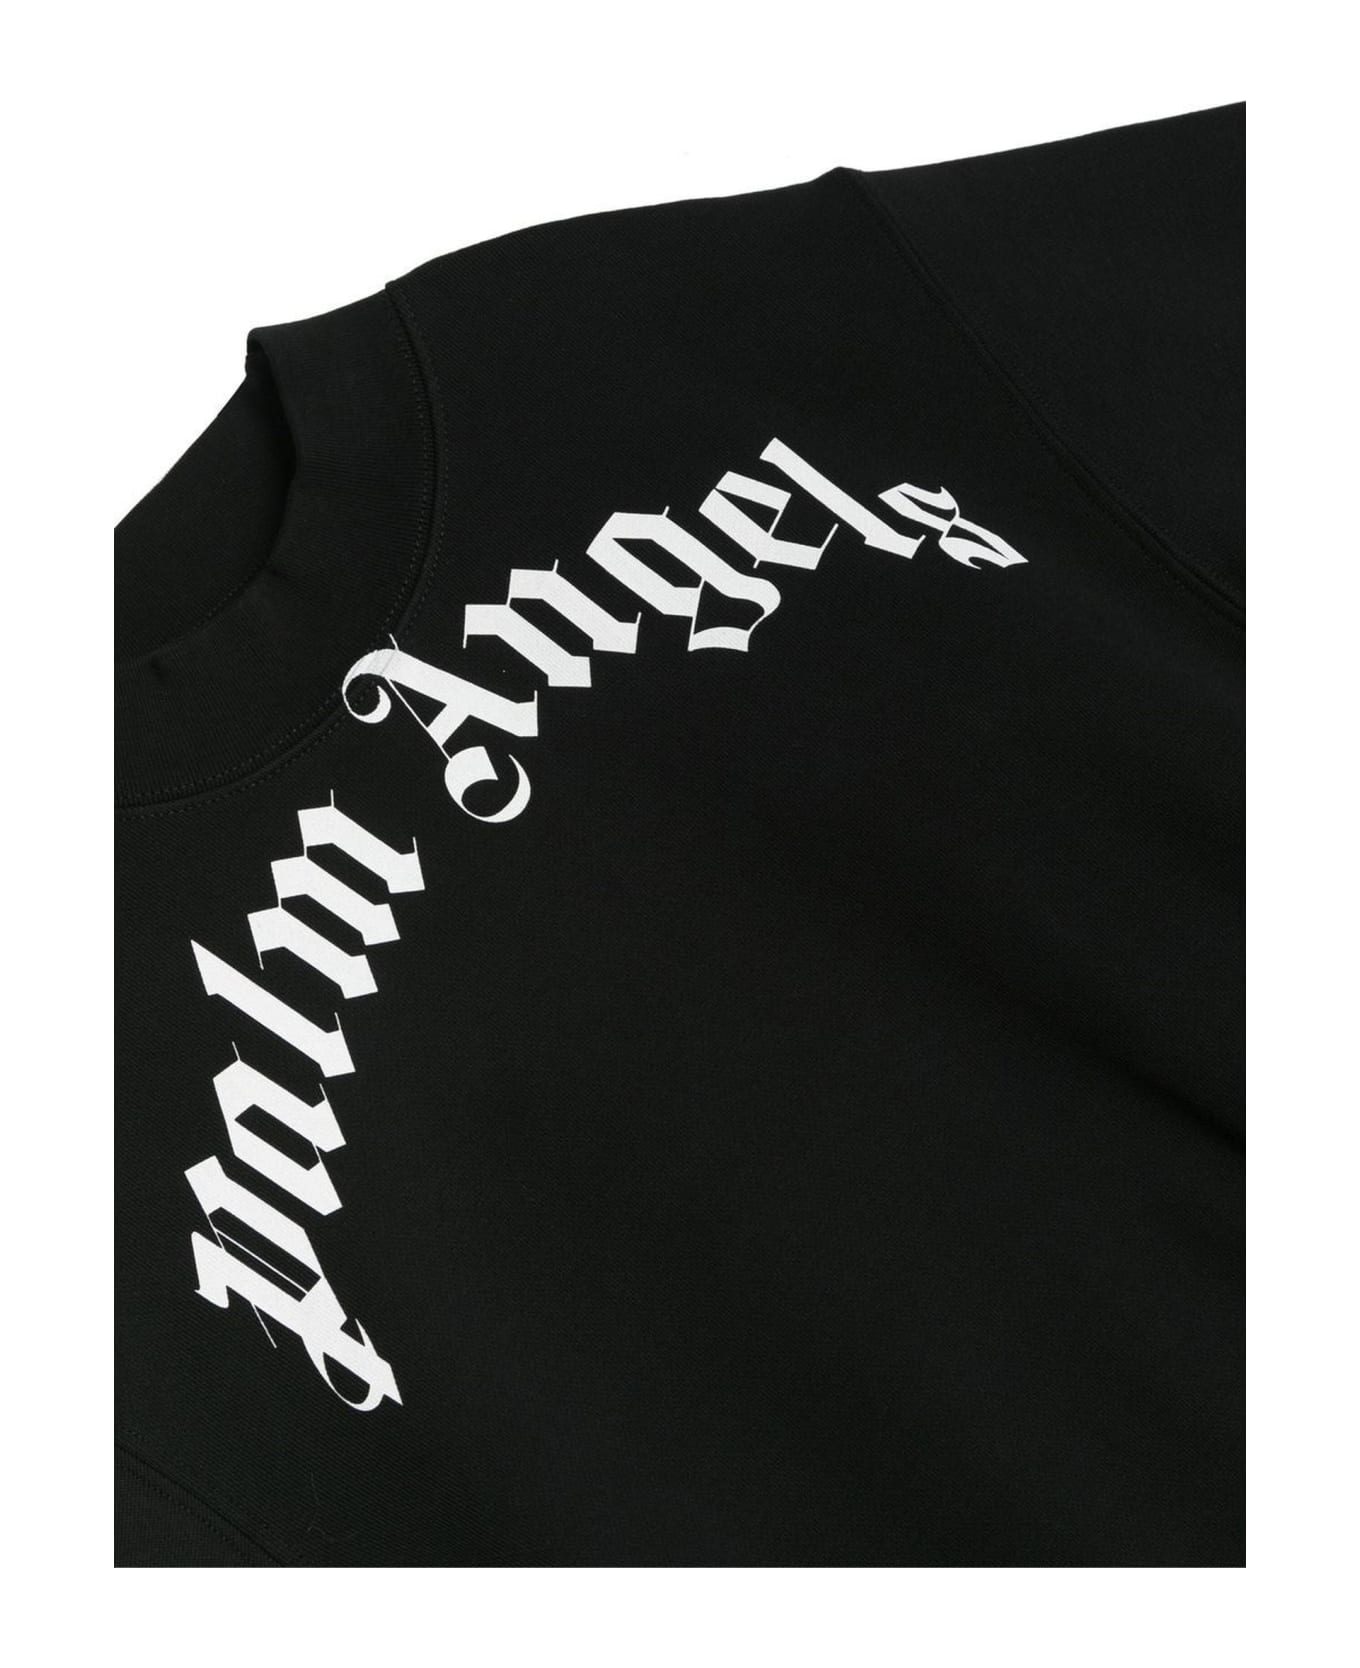 Palm Angels Black Cotton Sweatshirt - BLACK ニットウェア＆スウェットシャツ